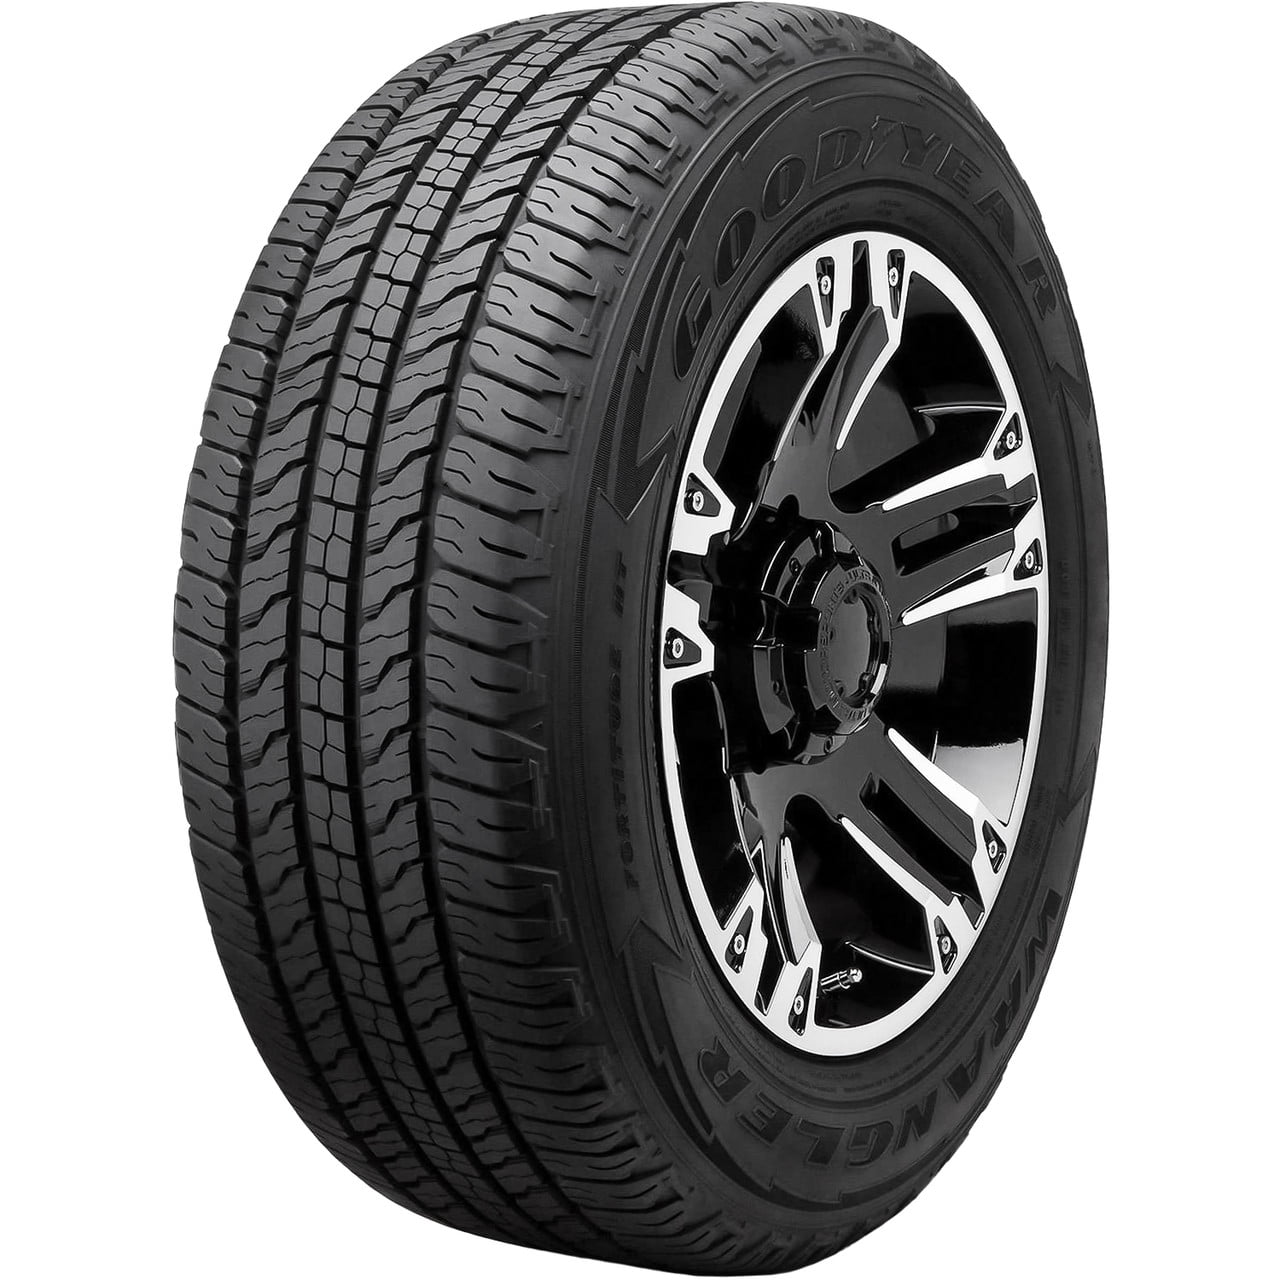 Pair Of 2 Goodyear Wrangler Fortitude HT All-Season Tires - 265/70R16 112T  